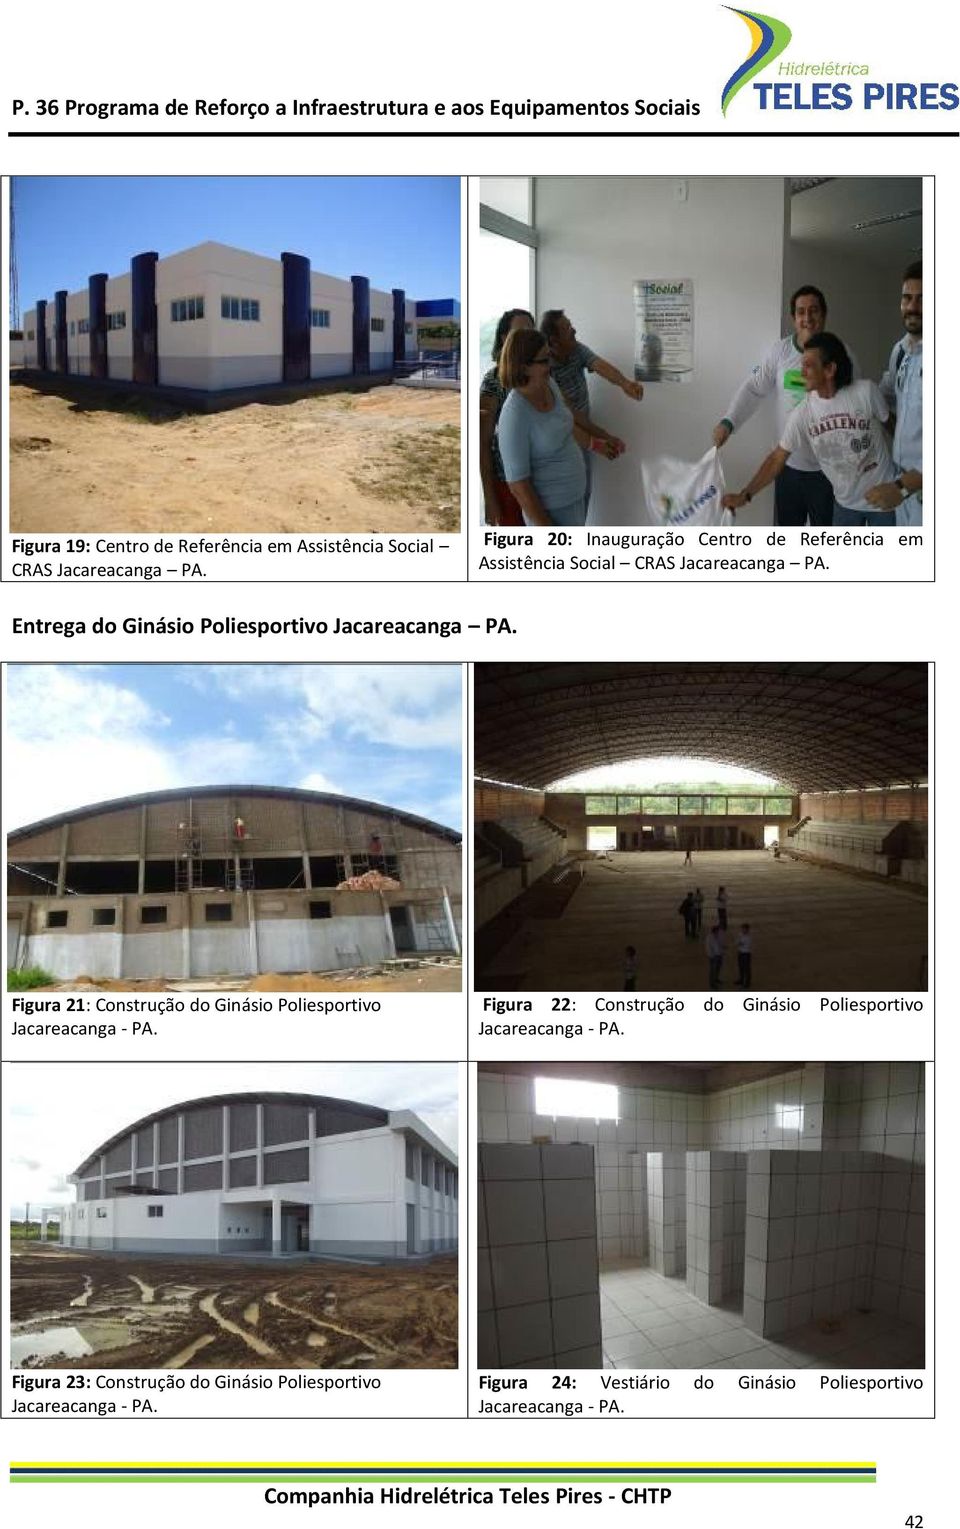 Entrega do Ginásio Poliesportivo Jacareacanga PA. Figura 21: Construção do Ginásio Poliesportivo Jacareacanga - PA.